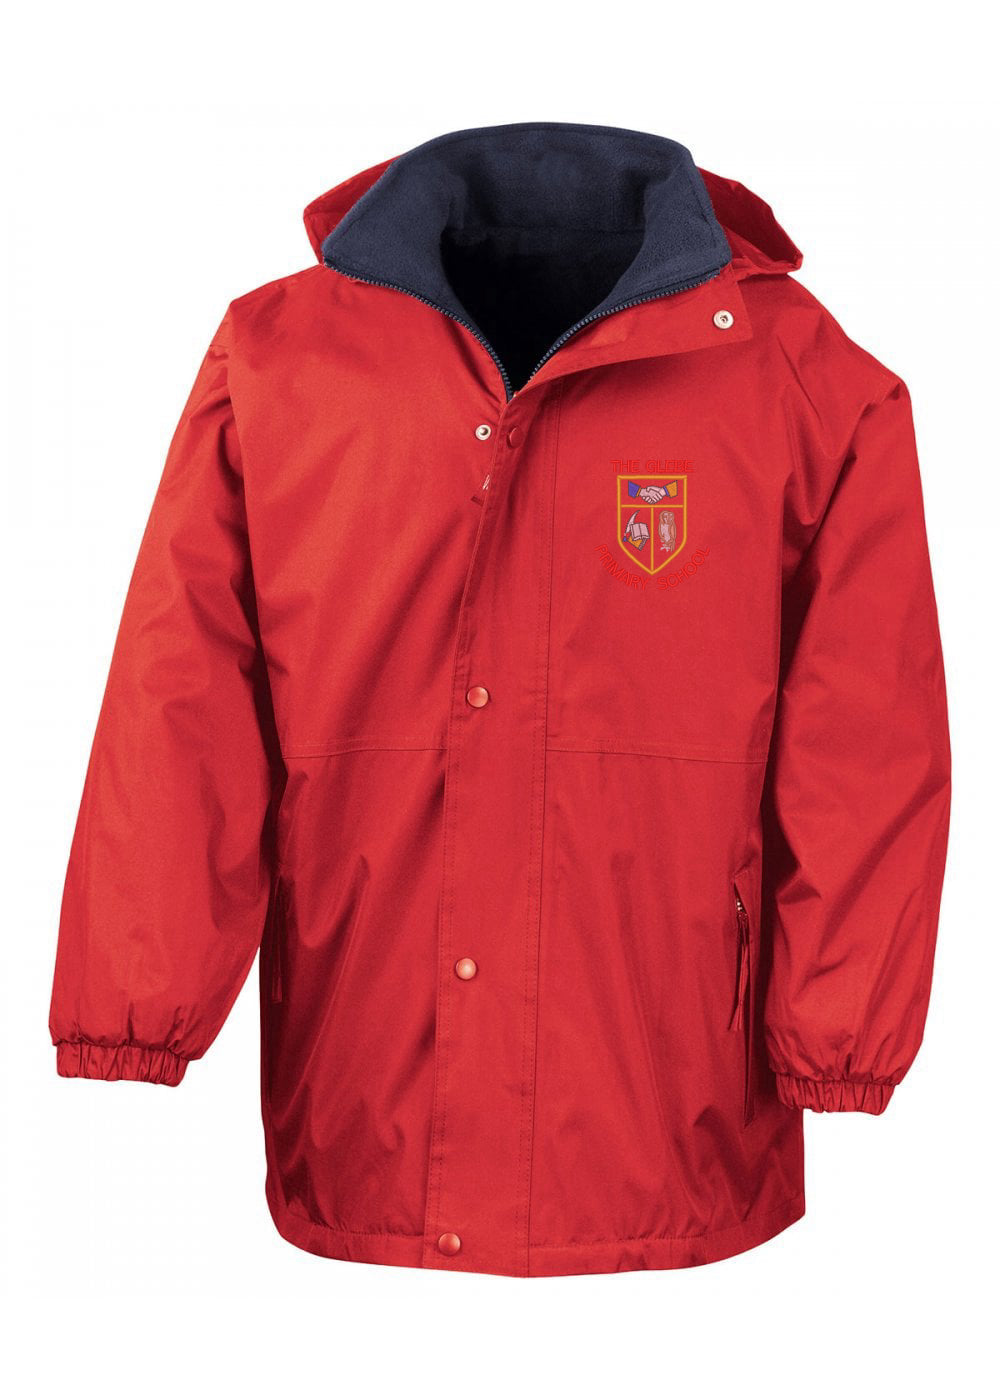 Glebe Red Winter Storm Jacket